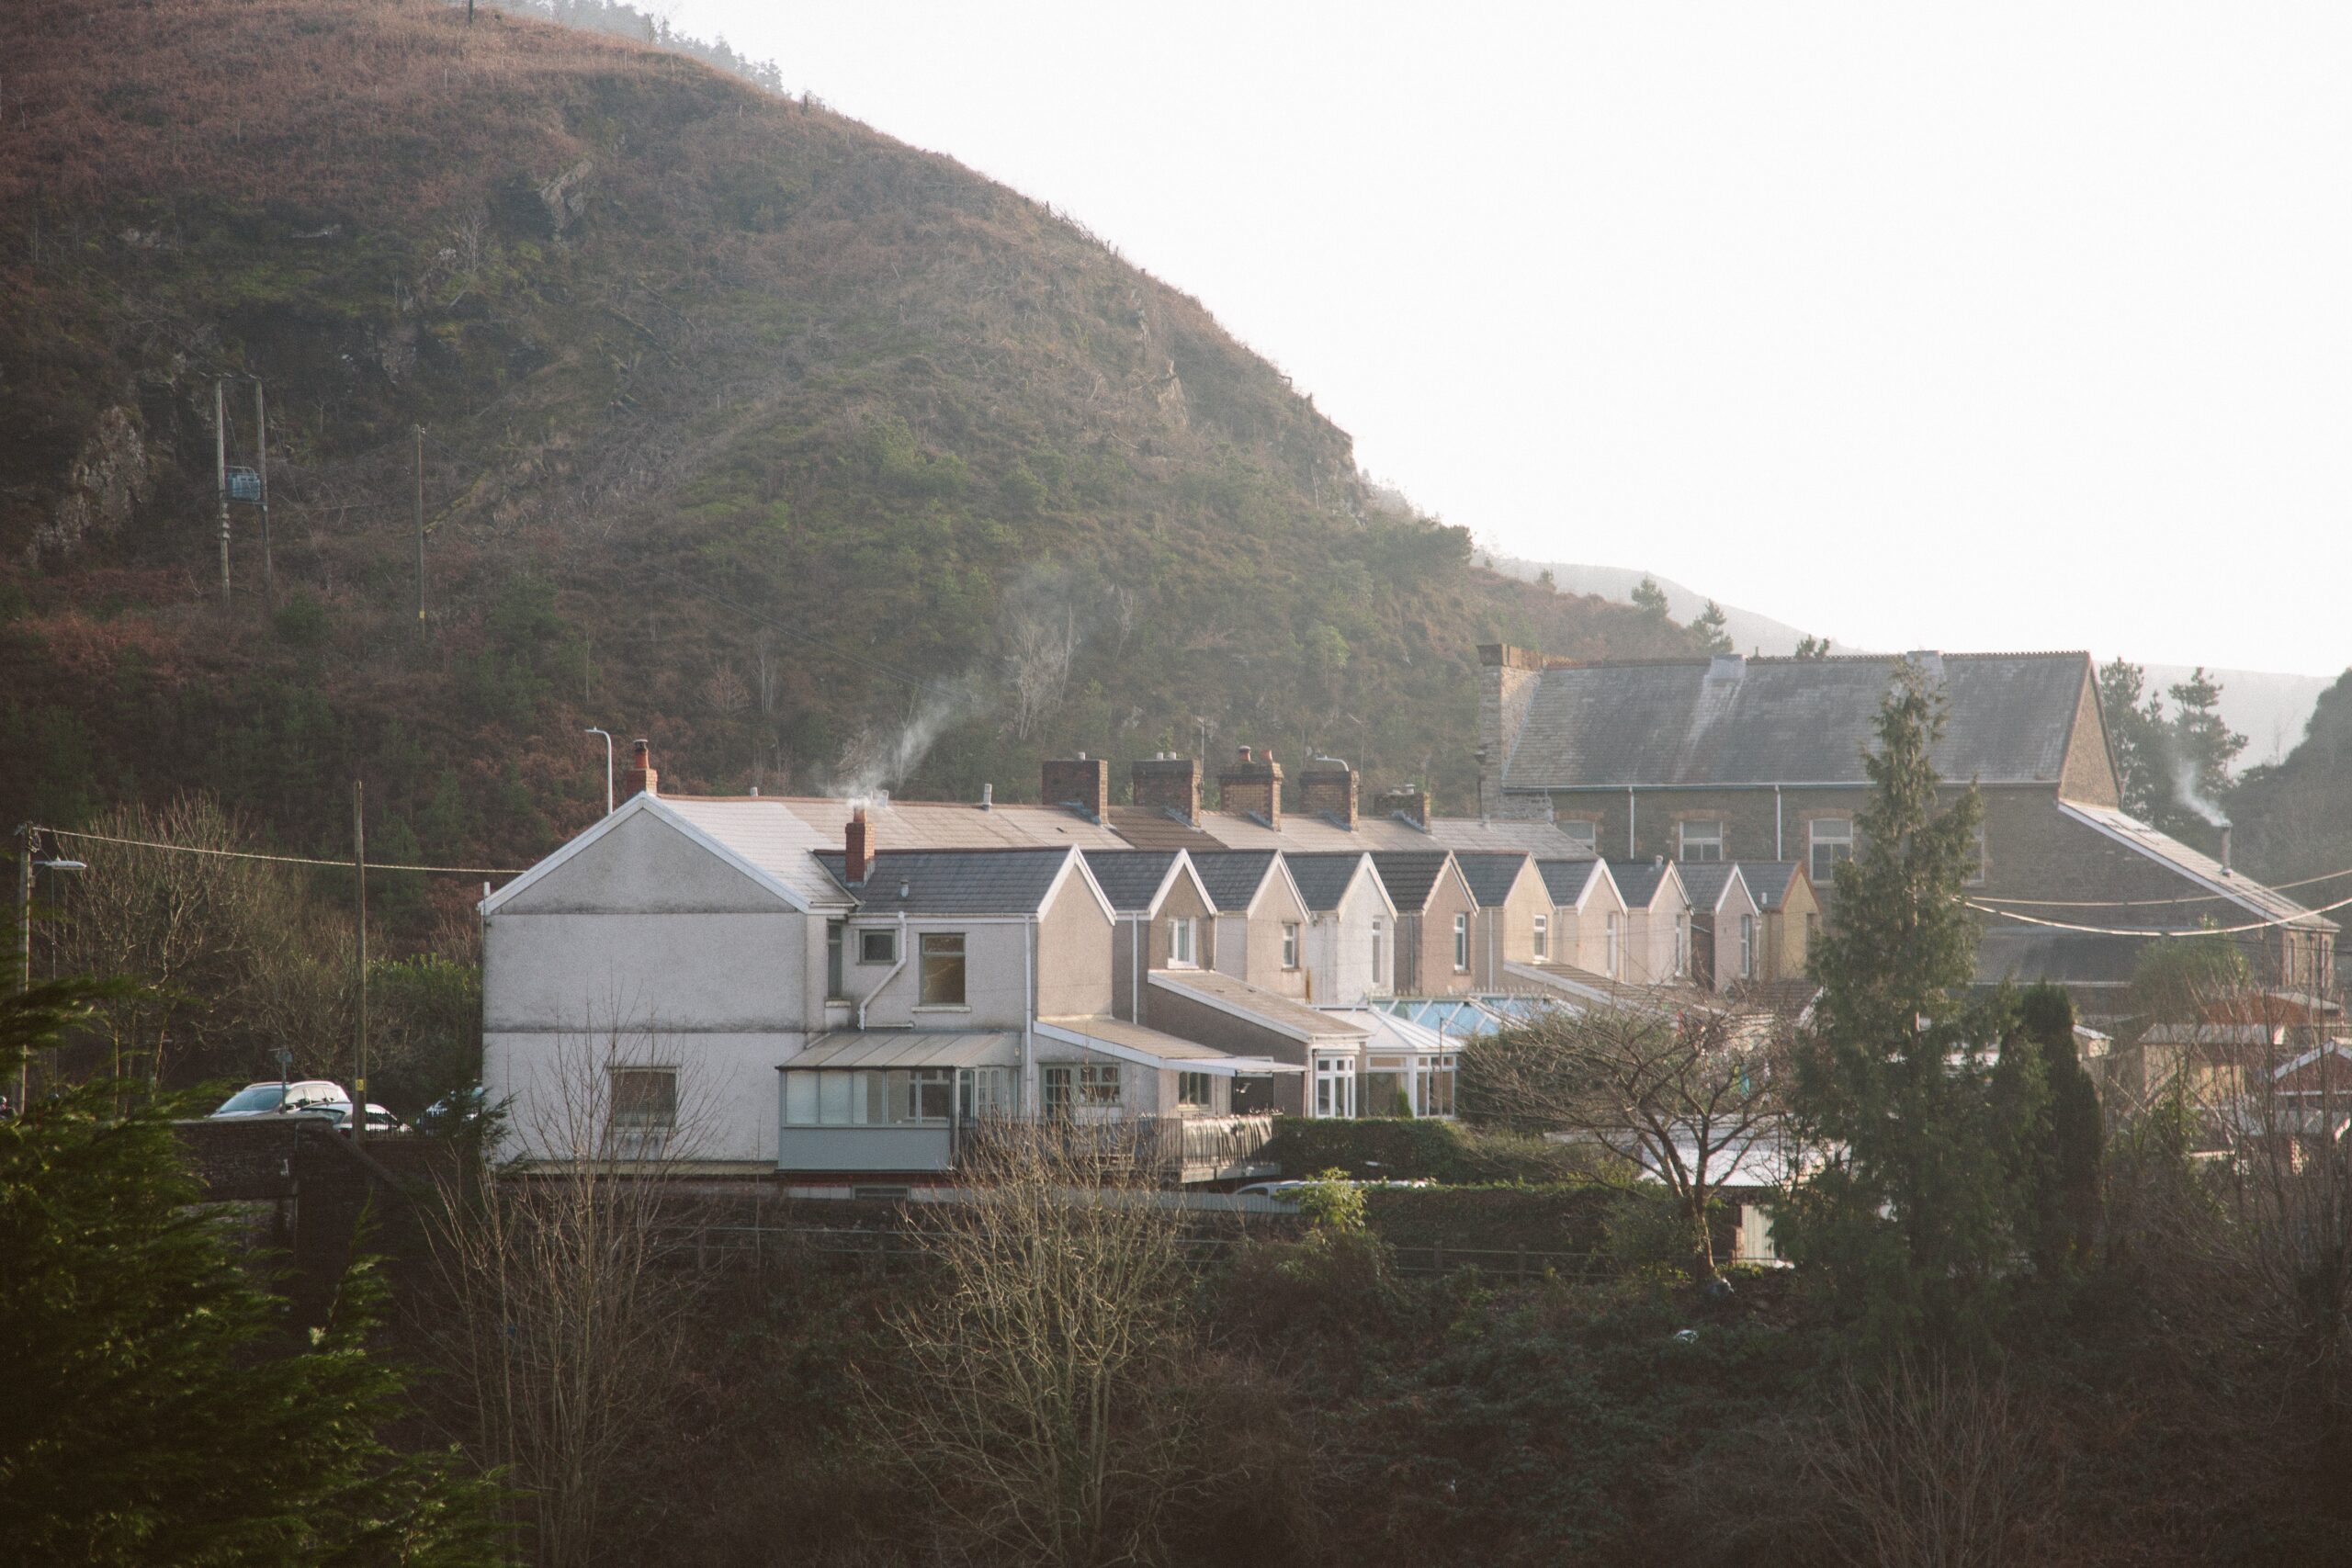 Houses in Welsh valleys